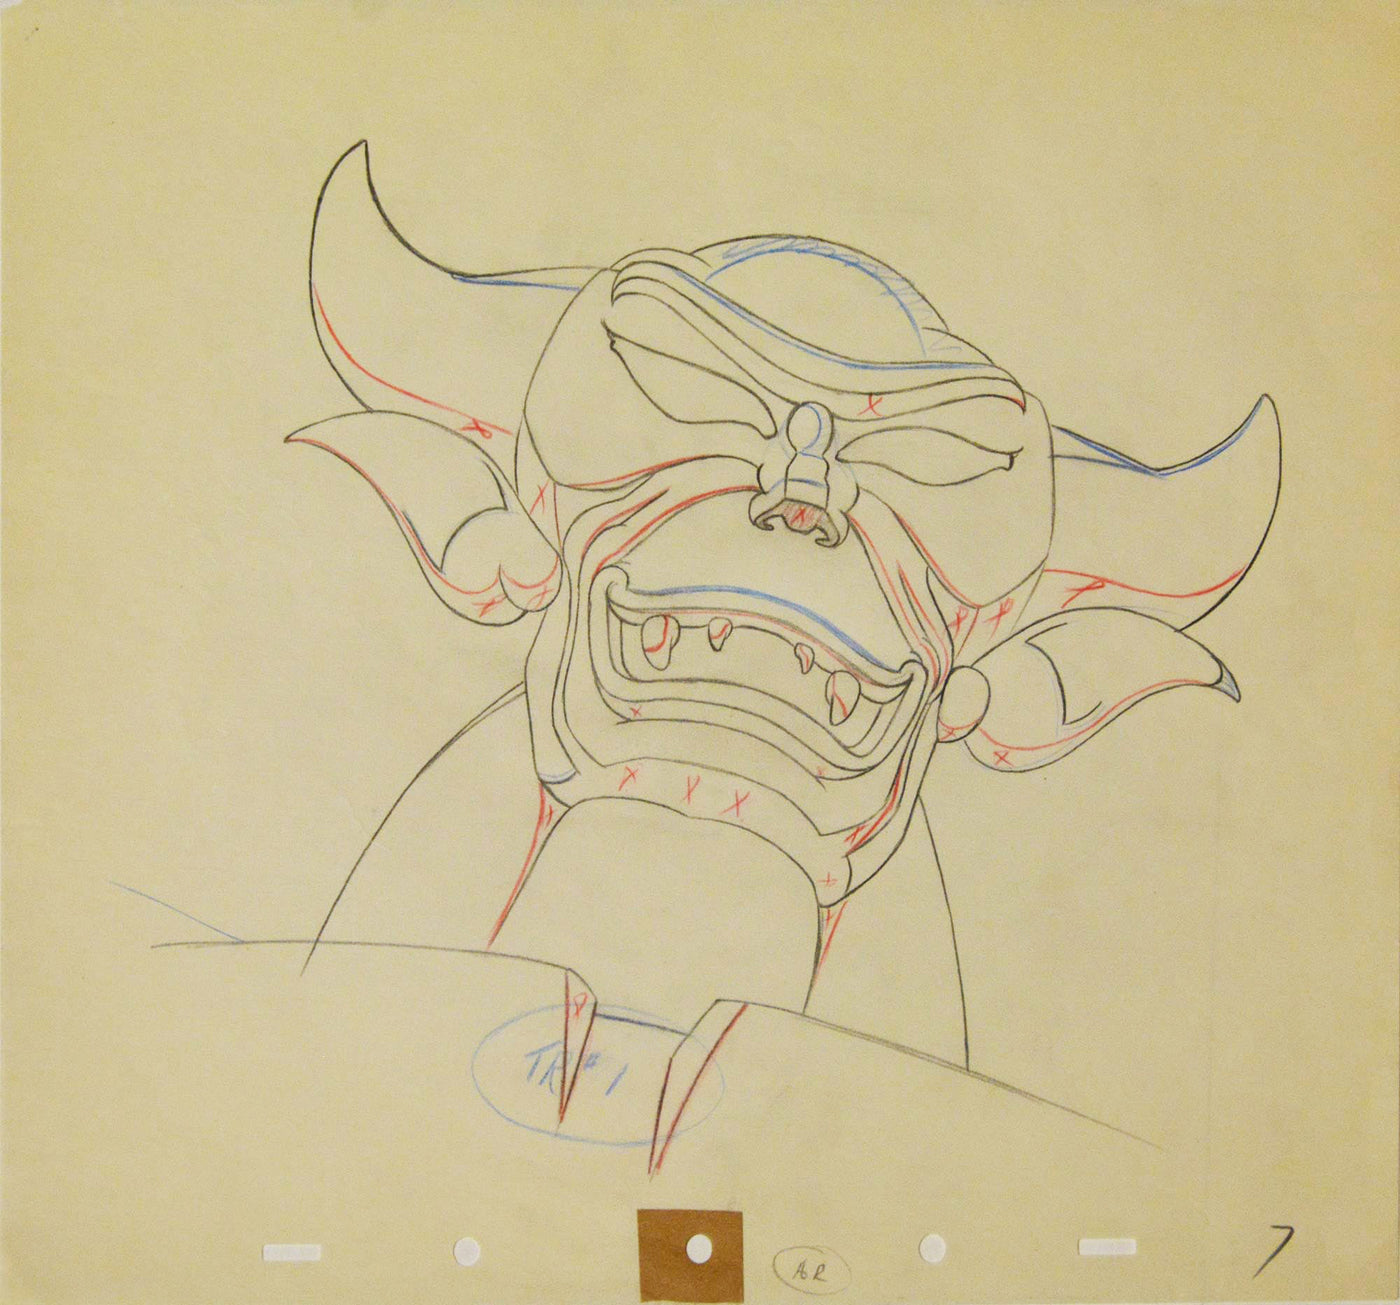 Original Disney Production Drawing Featuring Chernabog from Fantasia